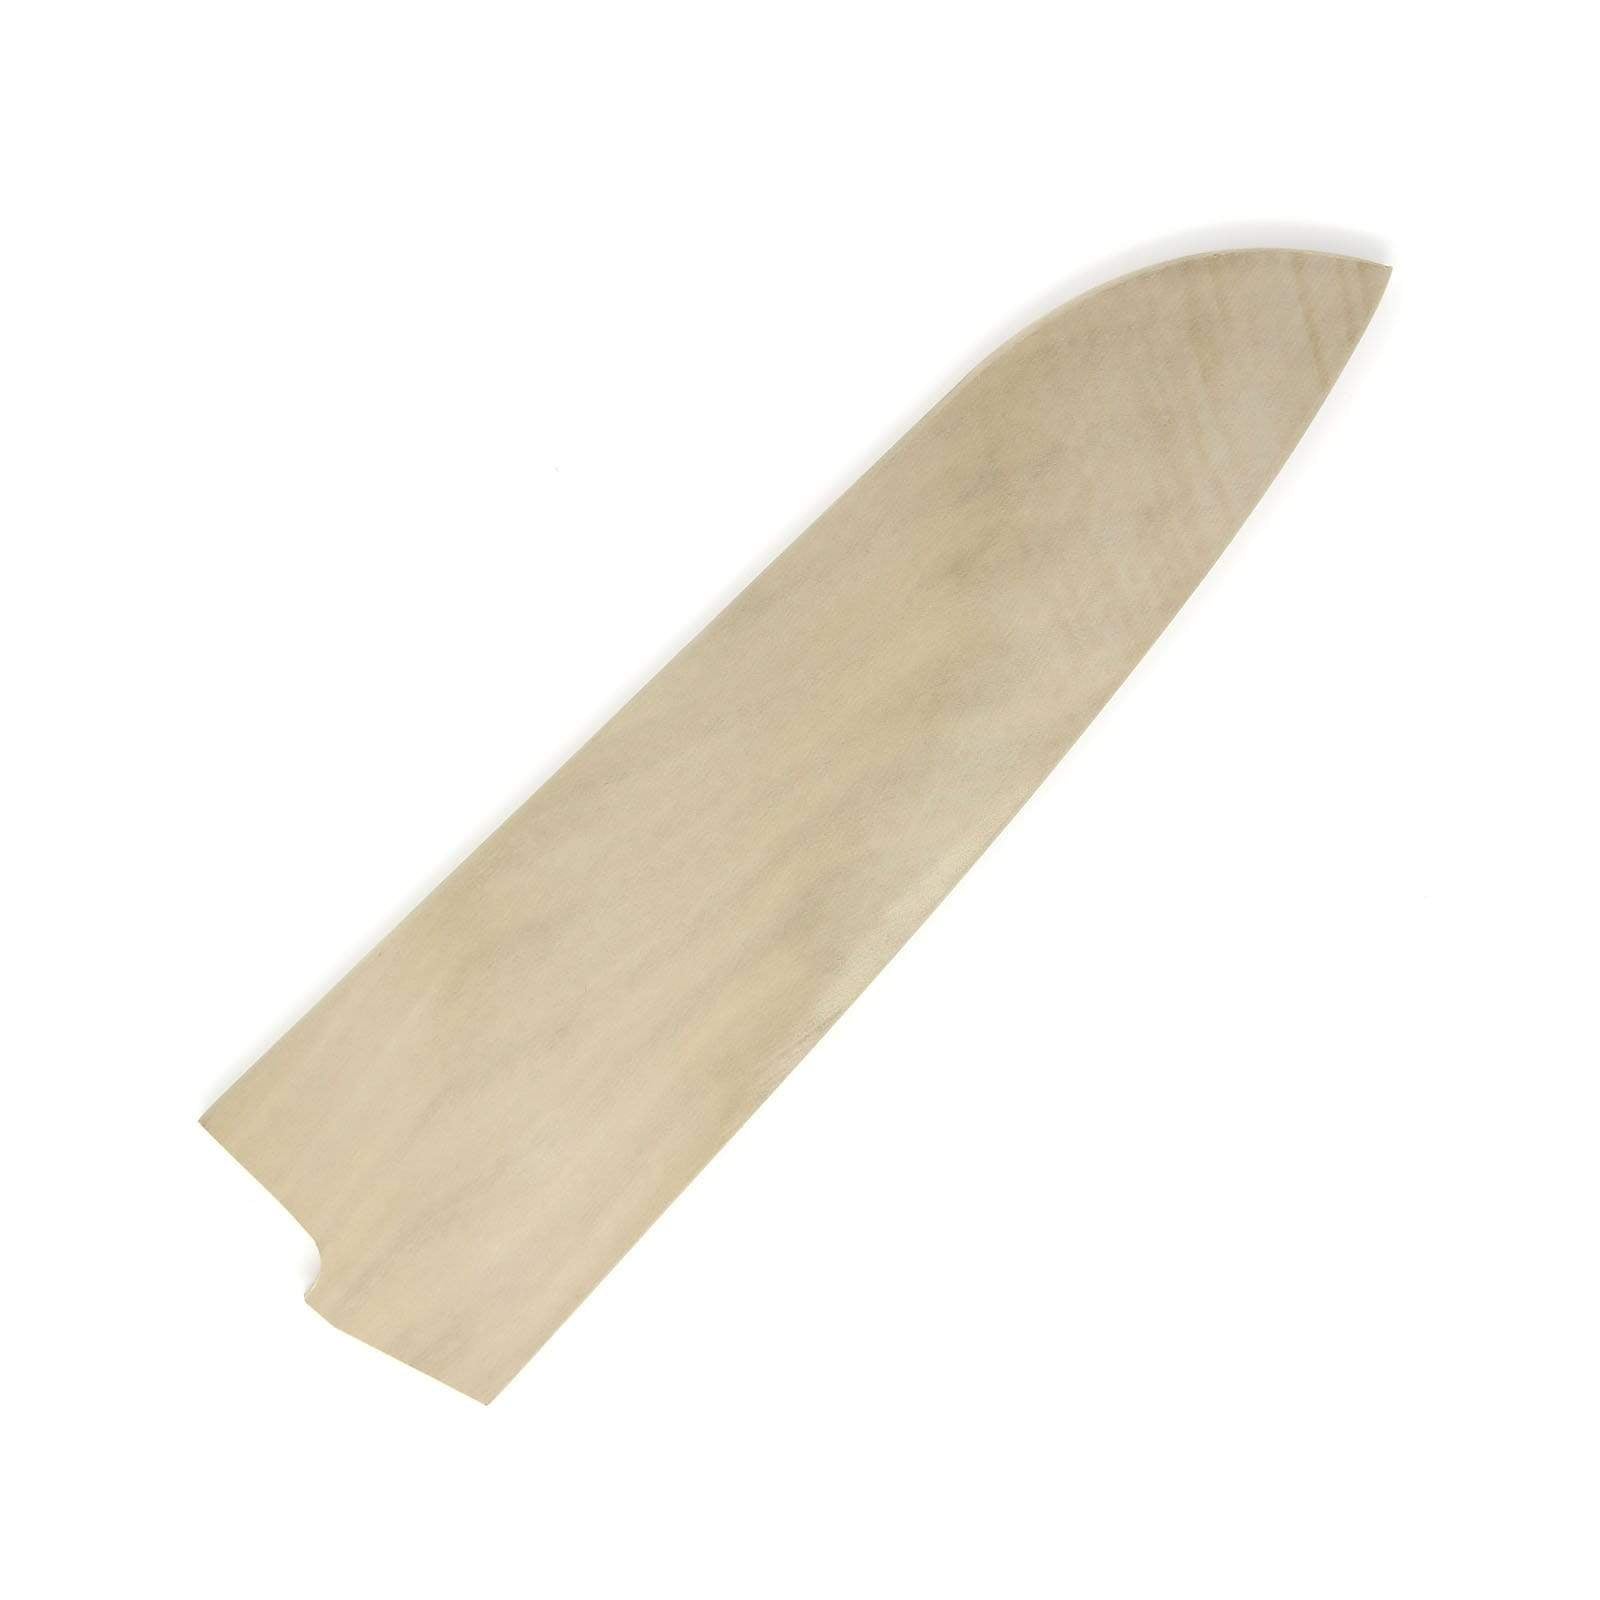 Plastic sheath (saya) for kitchen knife - Size:15/18/24cm